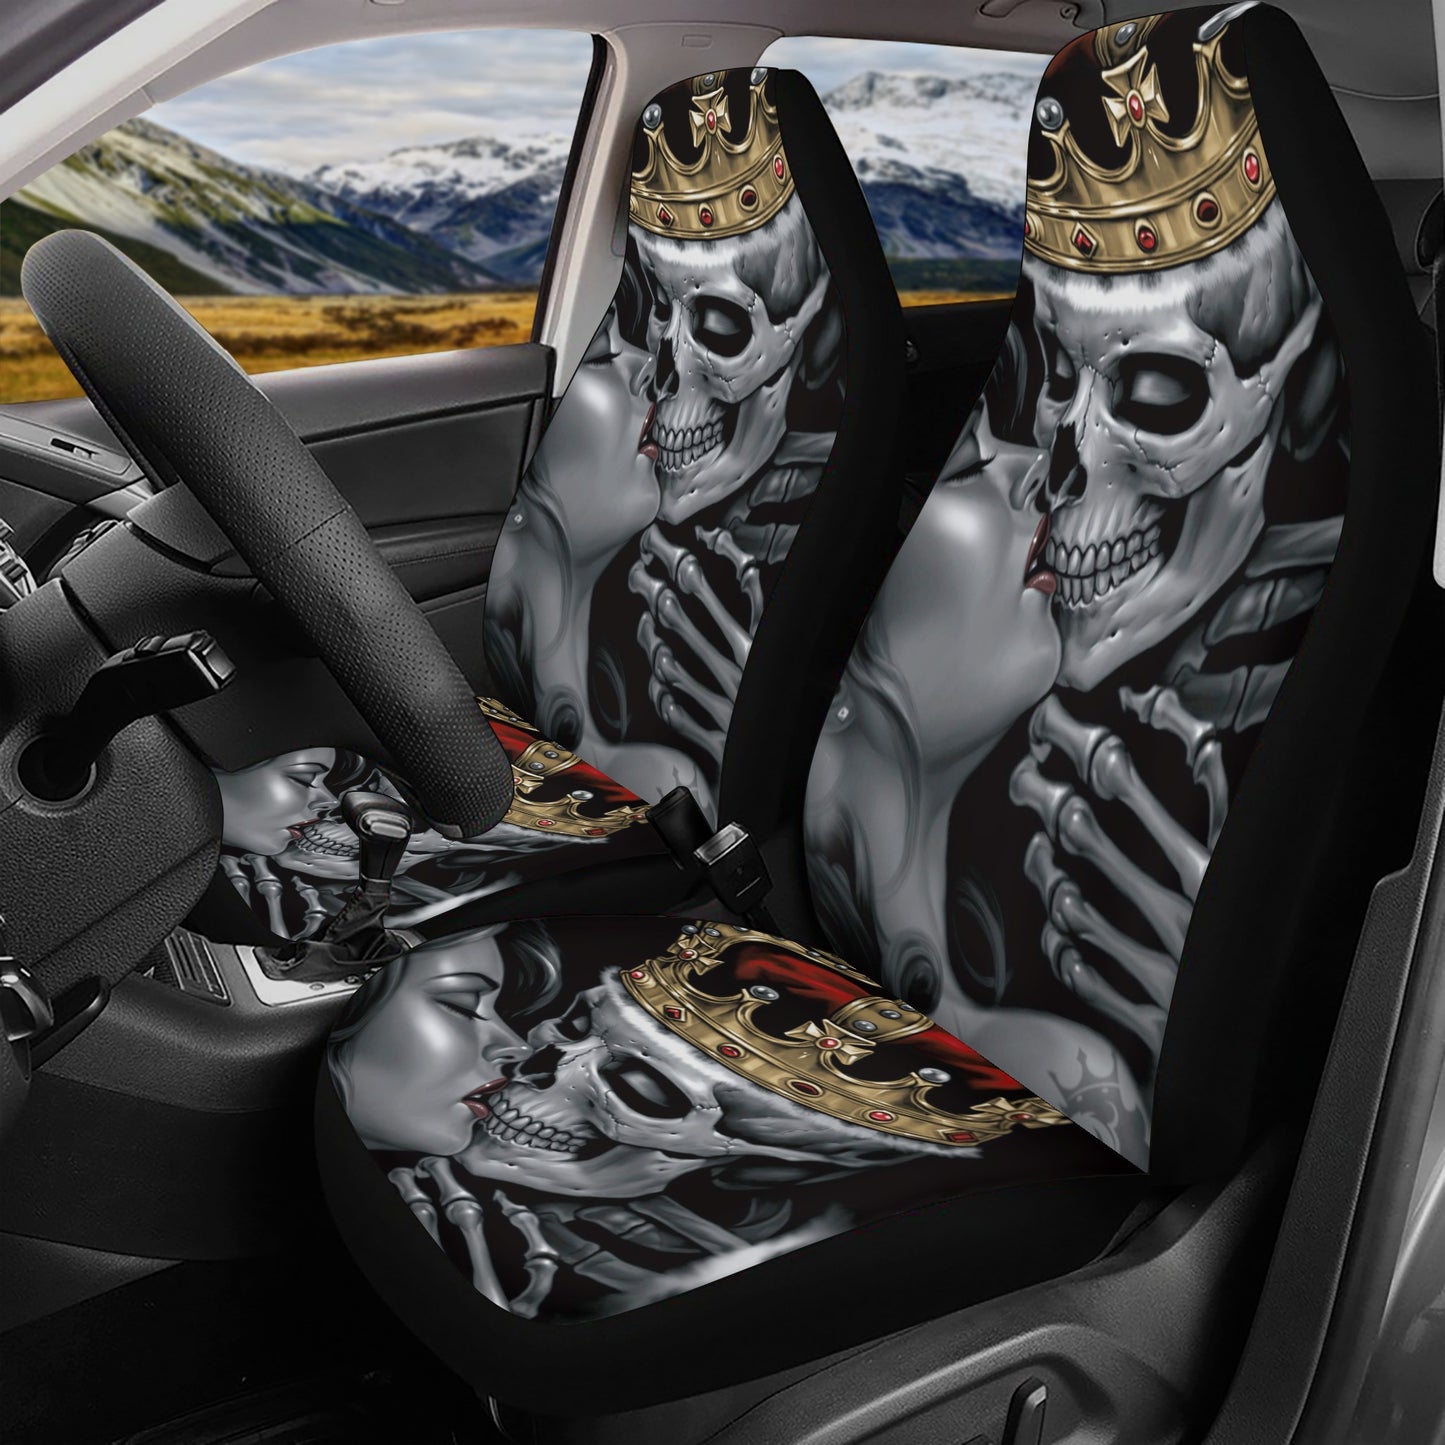 Evil seat cover for car, floral skull rug mat for car, goth car seat tool, skull car seat cover, skull in fire car seat cover full set, grim